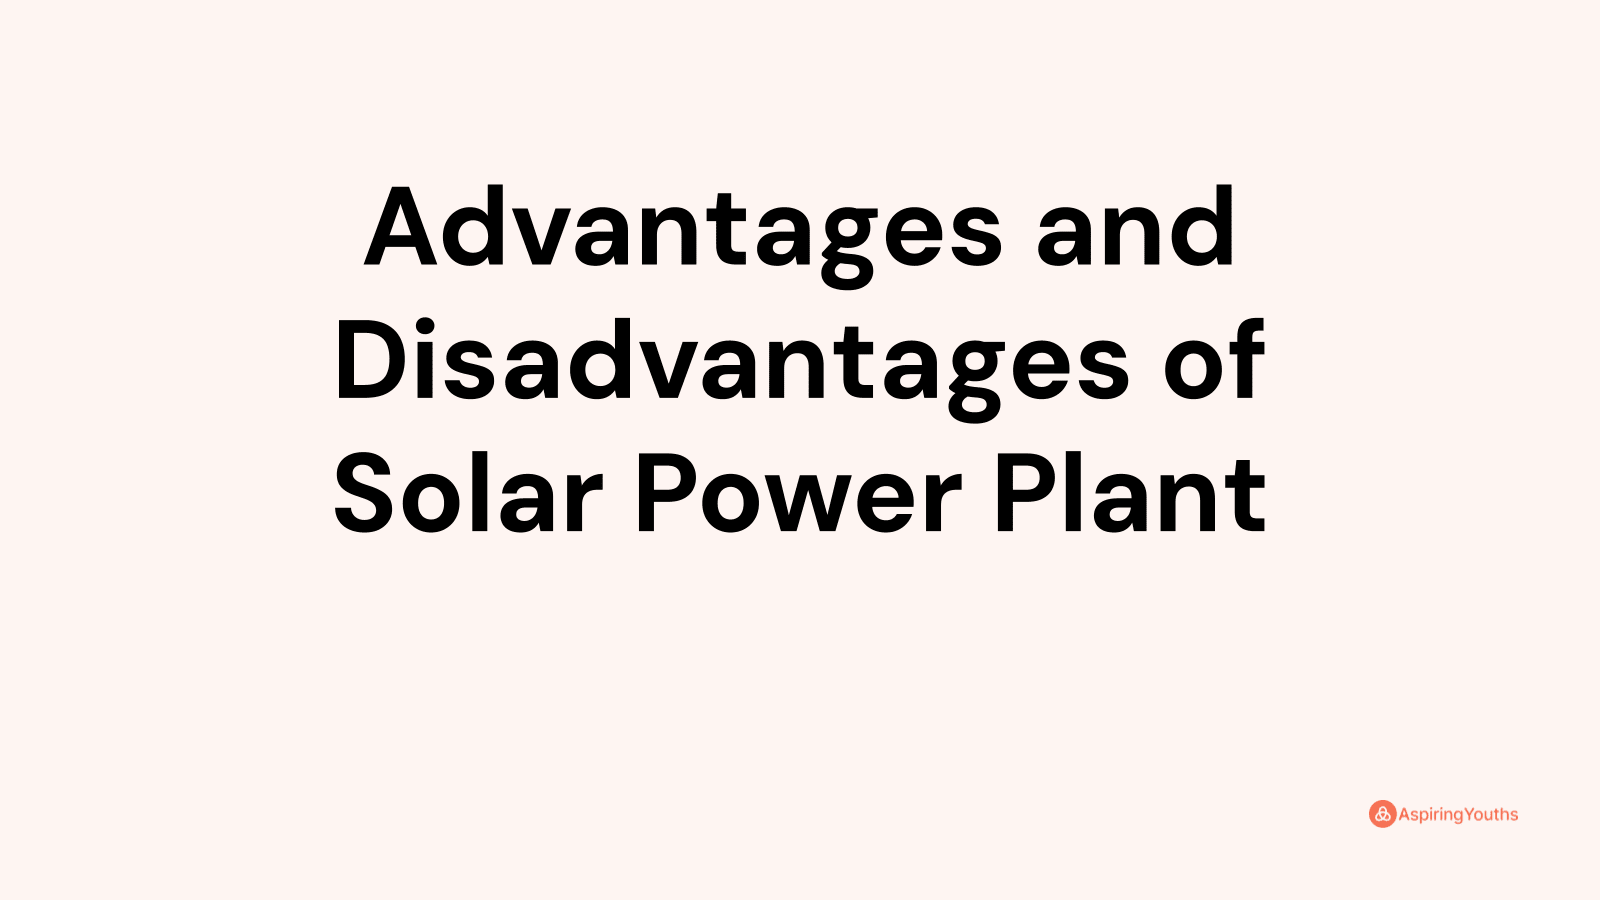 Advantages and disadvantages of Solar Power Plant